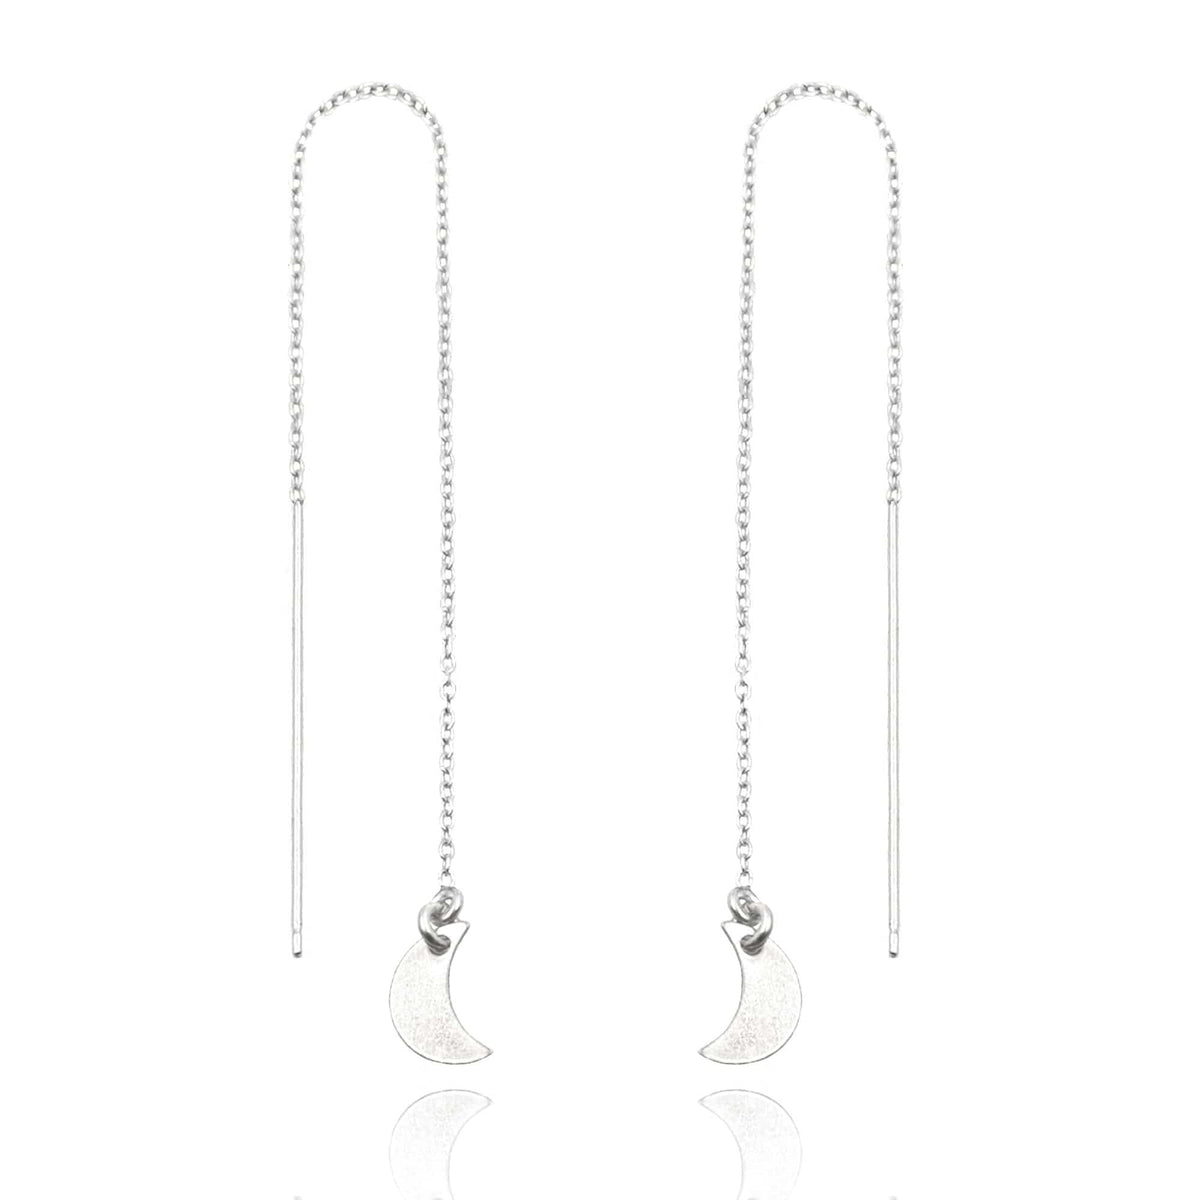 Crescent Moon Threader Earrings Dainty Earrings Sterling Silver MaeMae Jewelry | Ear Threaders | Long Crescent Moon Chain Earrings